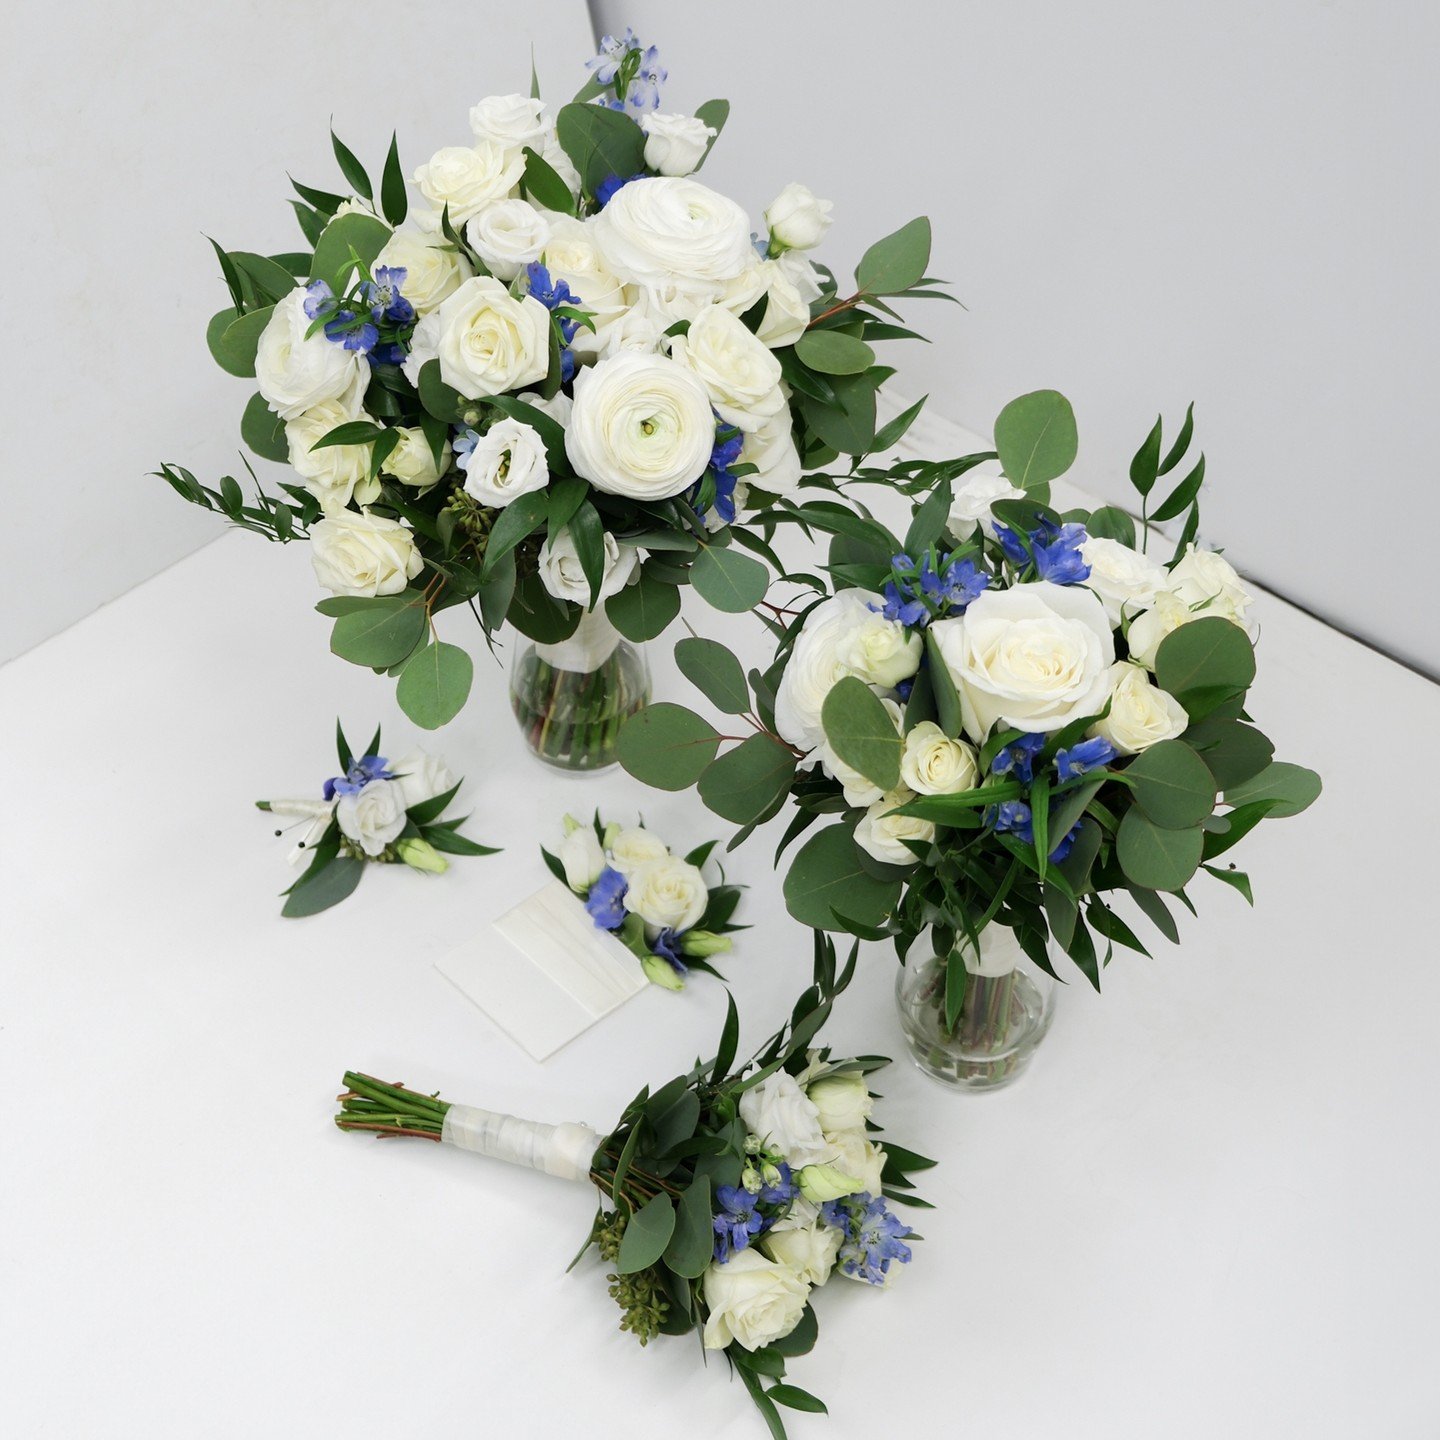 A white and blue wedding party set featuring white ranunculus, blue spray delphinium, white lisianthus and white roses. 

#mississaugaflorist #mississaugaflowers #gtaflorist #flowers #flowershop #flowerfantasy #florist #ukrainianflorist #weddingflowe